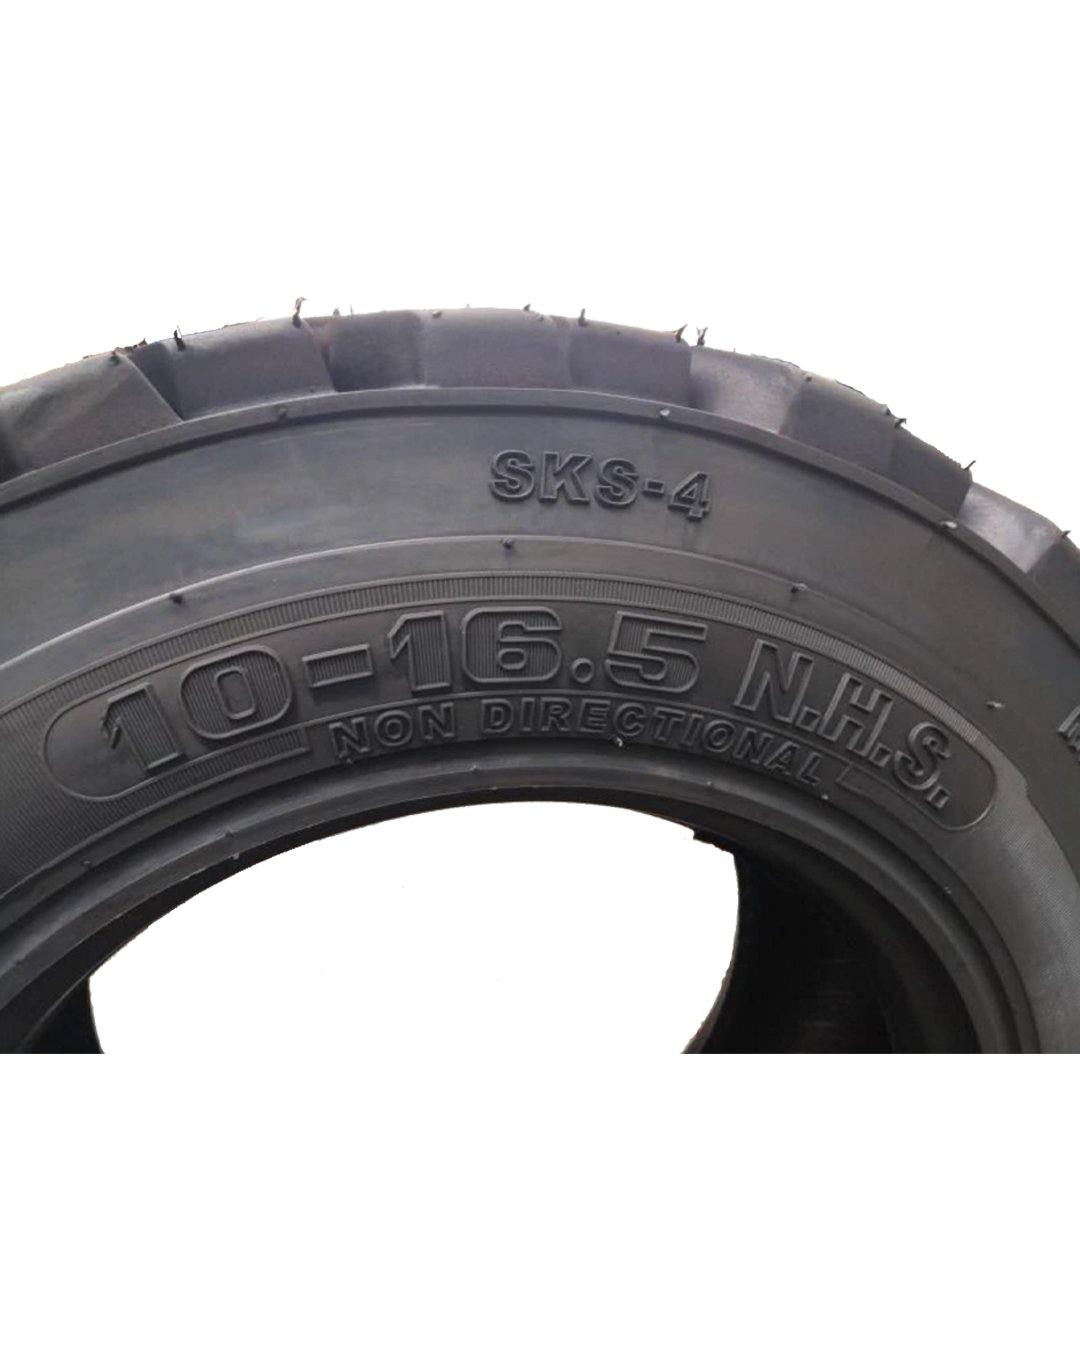 Labadi Tyres Bobcat/Skid Steer Tyres - SKS-4